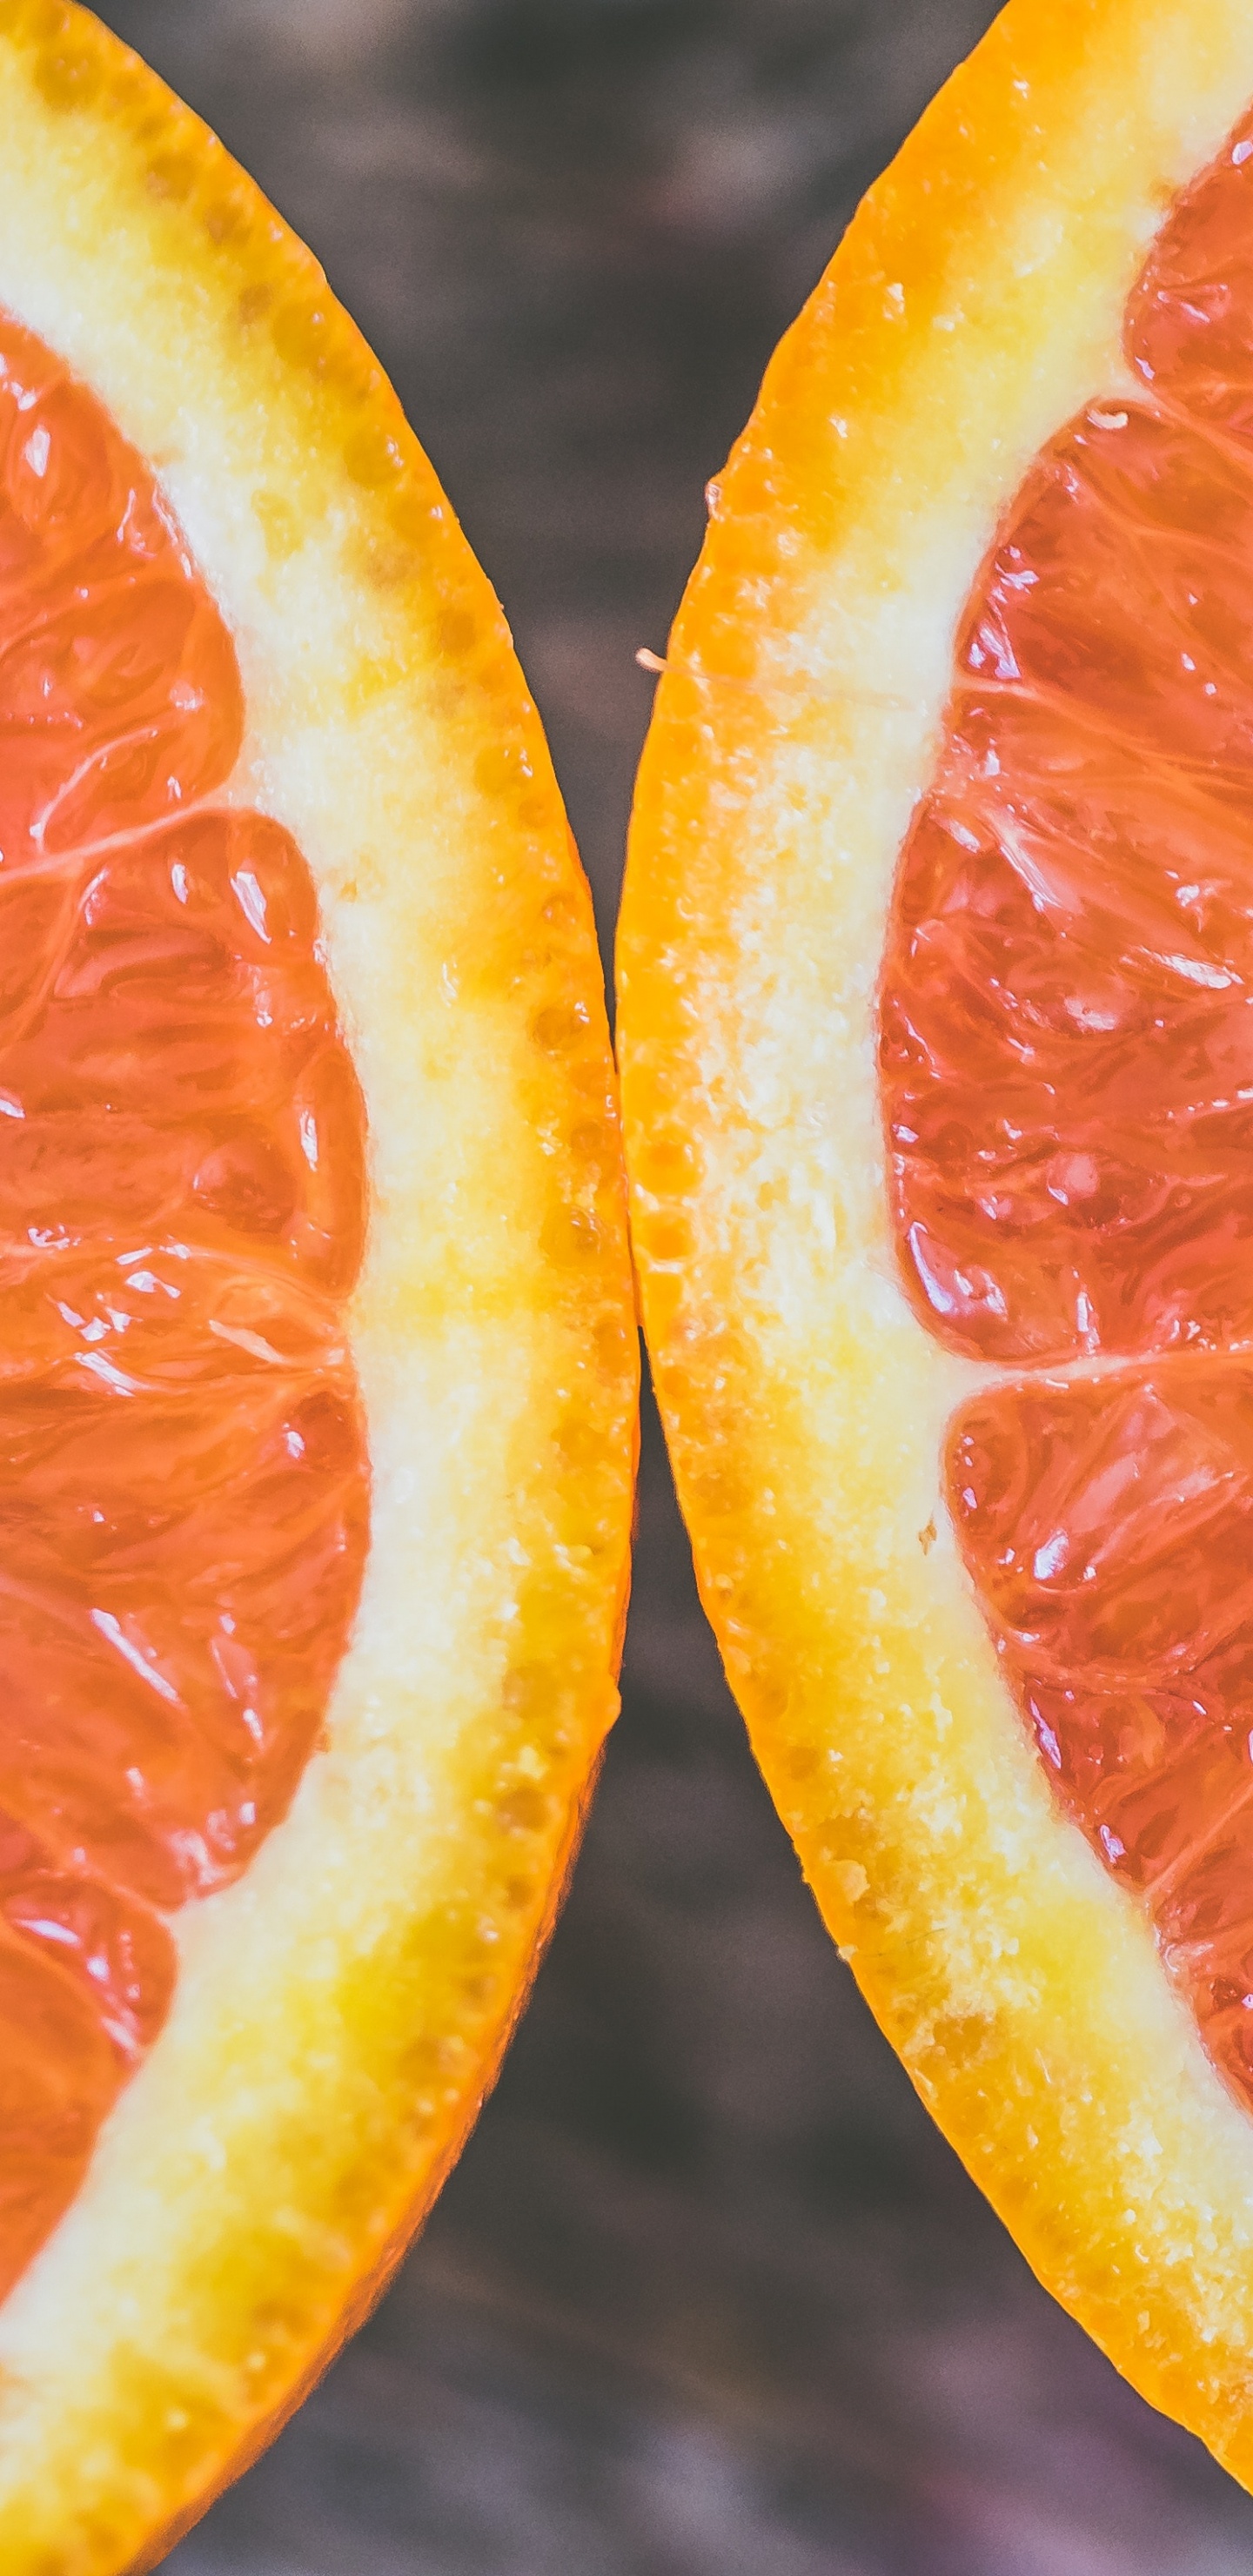 Fruits Orange Tranchés en Photographie Rapprochée. Wallpaper in 1440x2960 Resolution